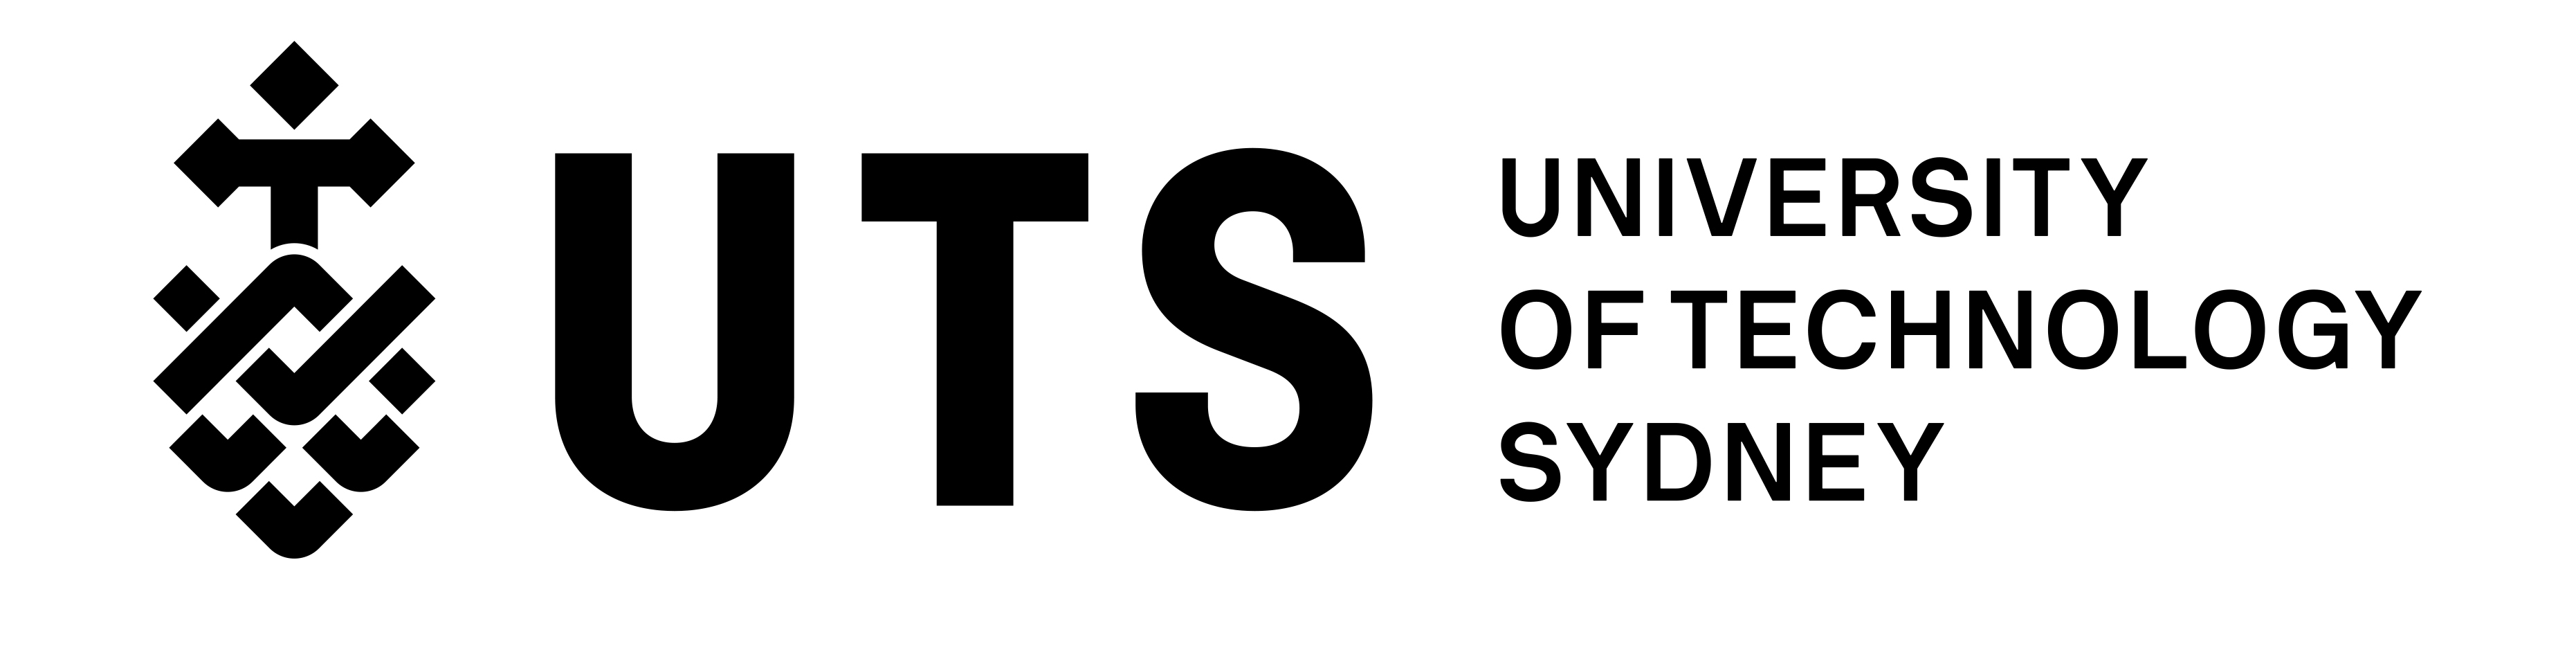 UTS logo.